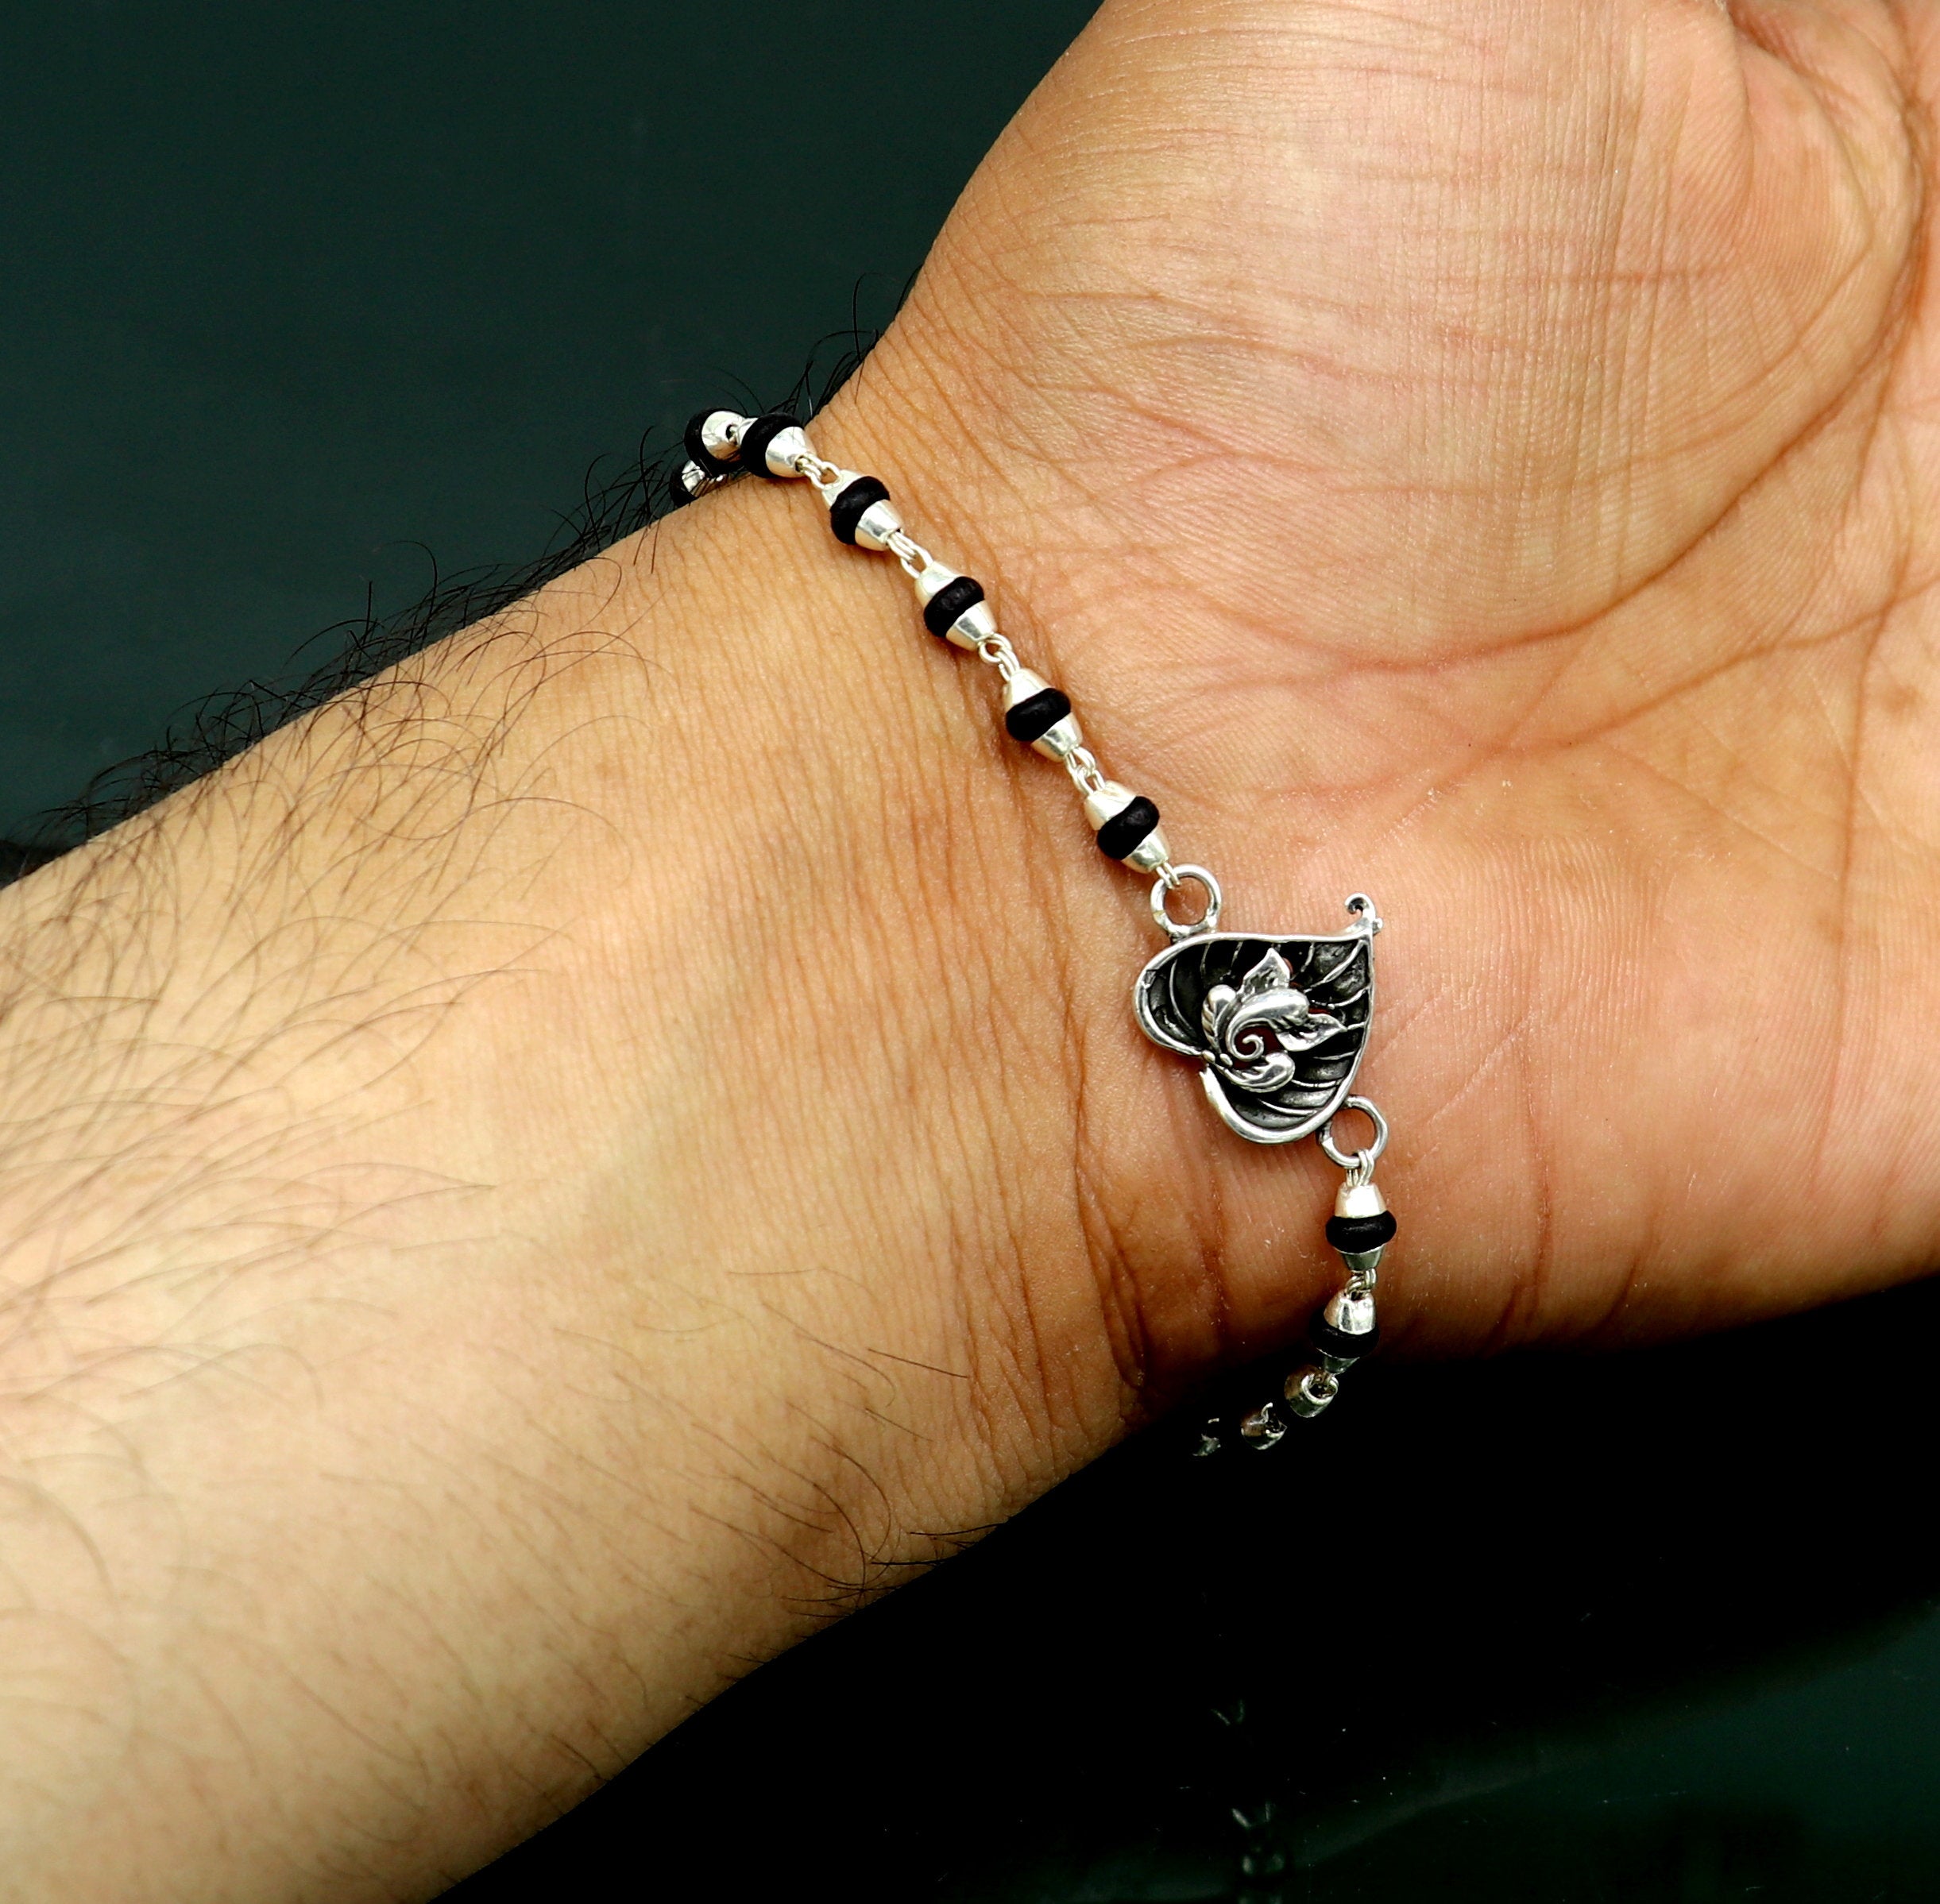 Buy Ganesh Bracelet STERLING SILVER 925 Lord Ganesha Ganapati Om Ohm Aum  Spiritual Amulet Talisman 8-9 Inches Online in India - Etsy